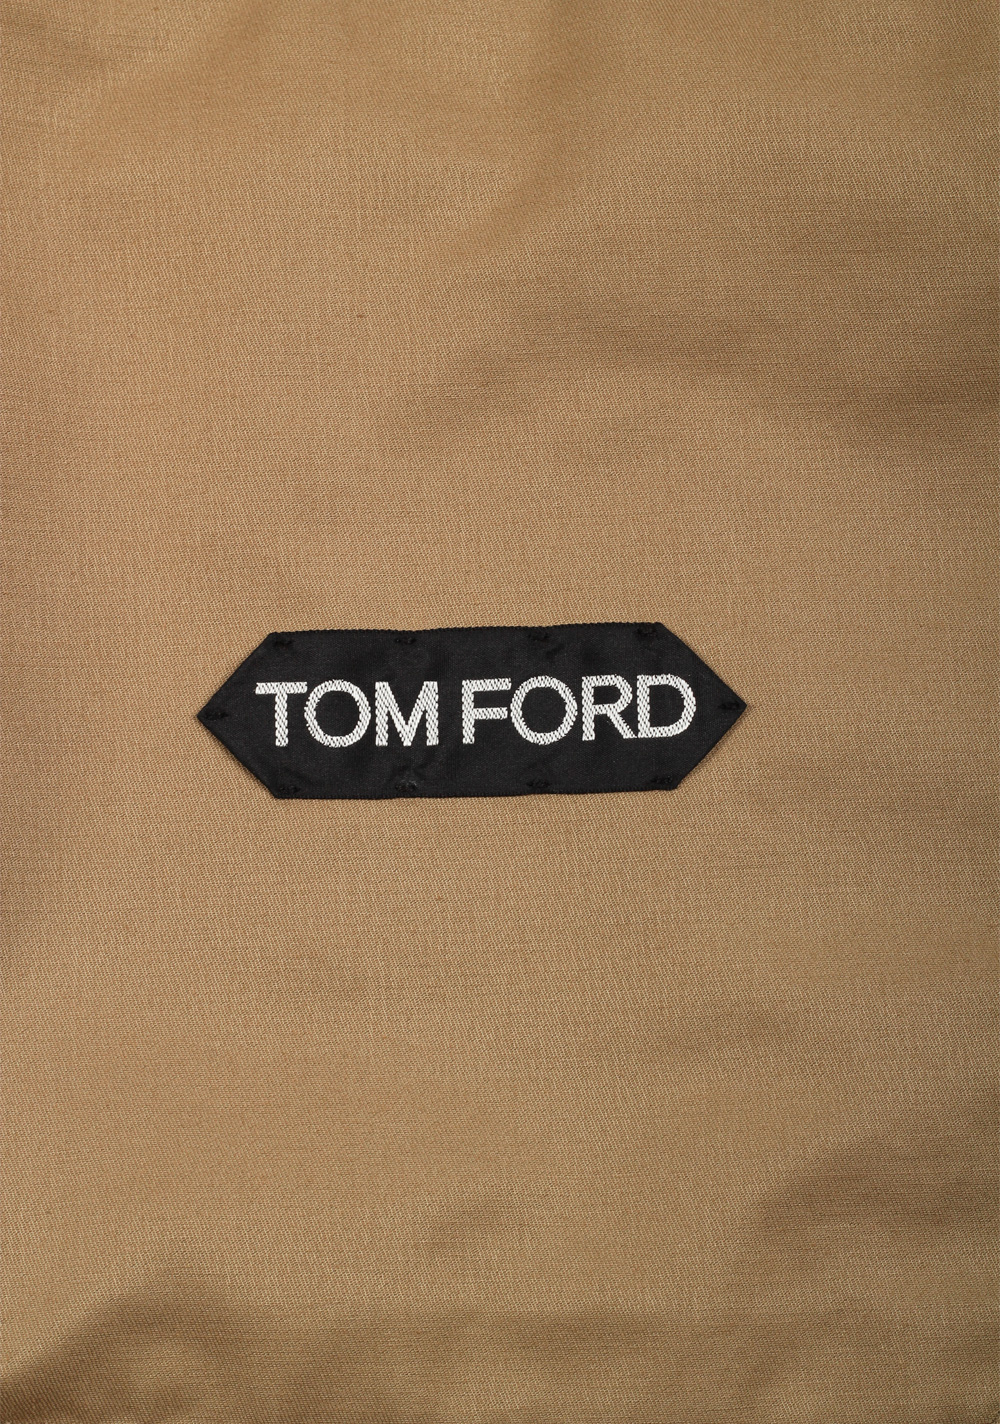 TOM FORD Beige Jacket Coat Size 58 / 48R U.S. Outerwear | Costume Limité